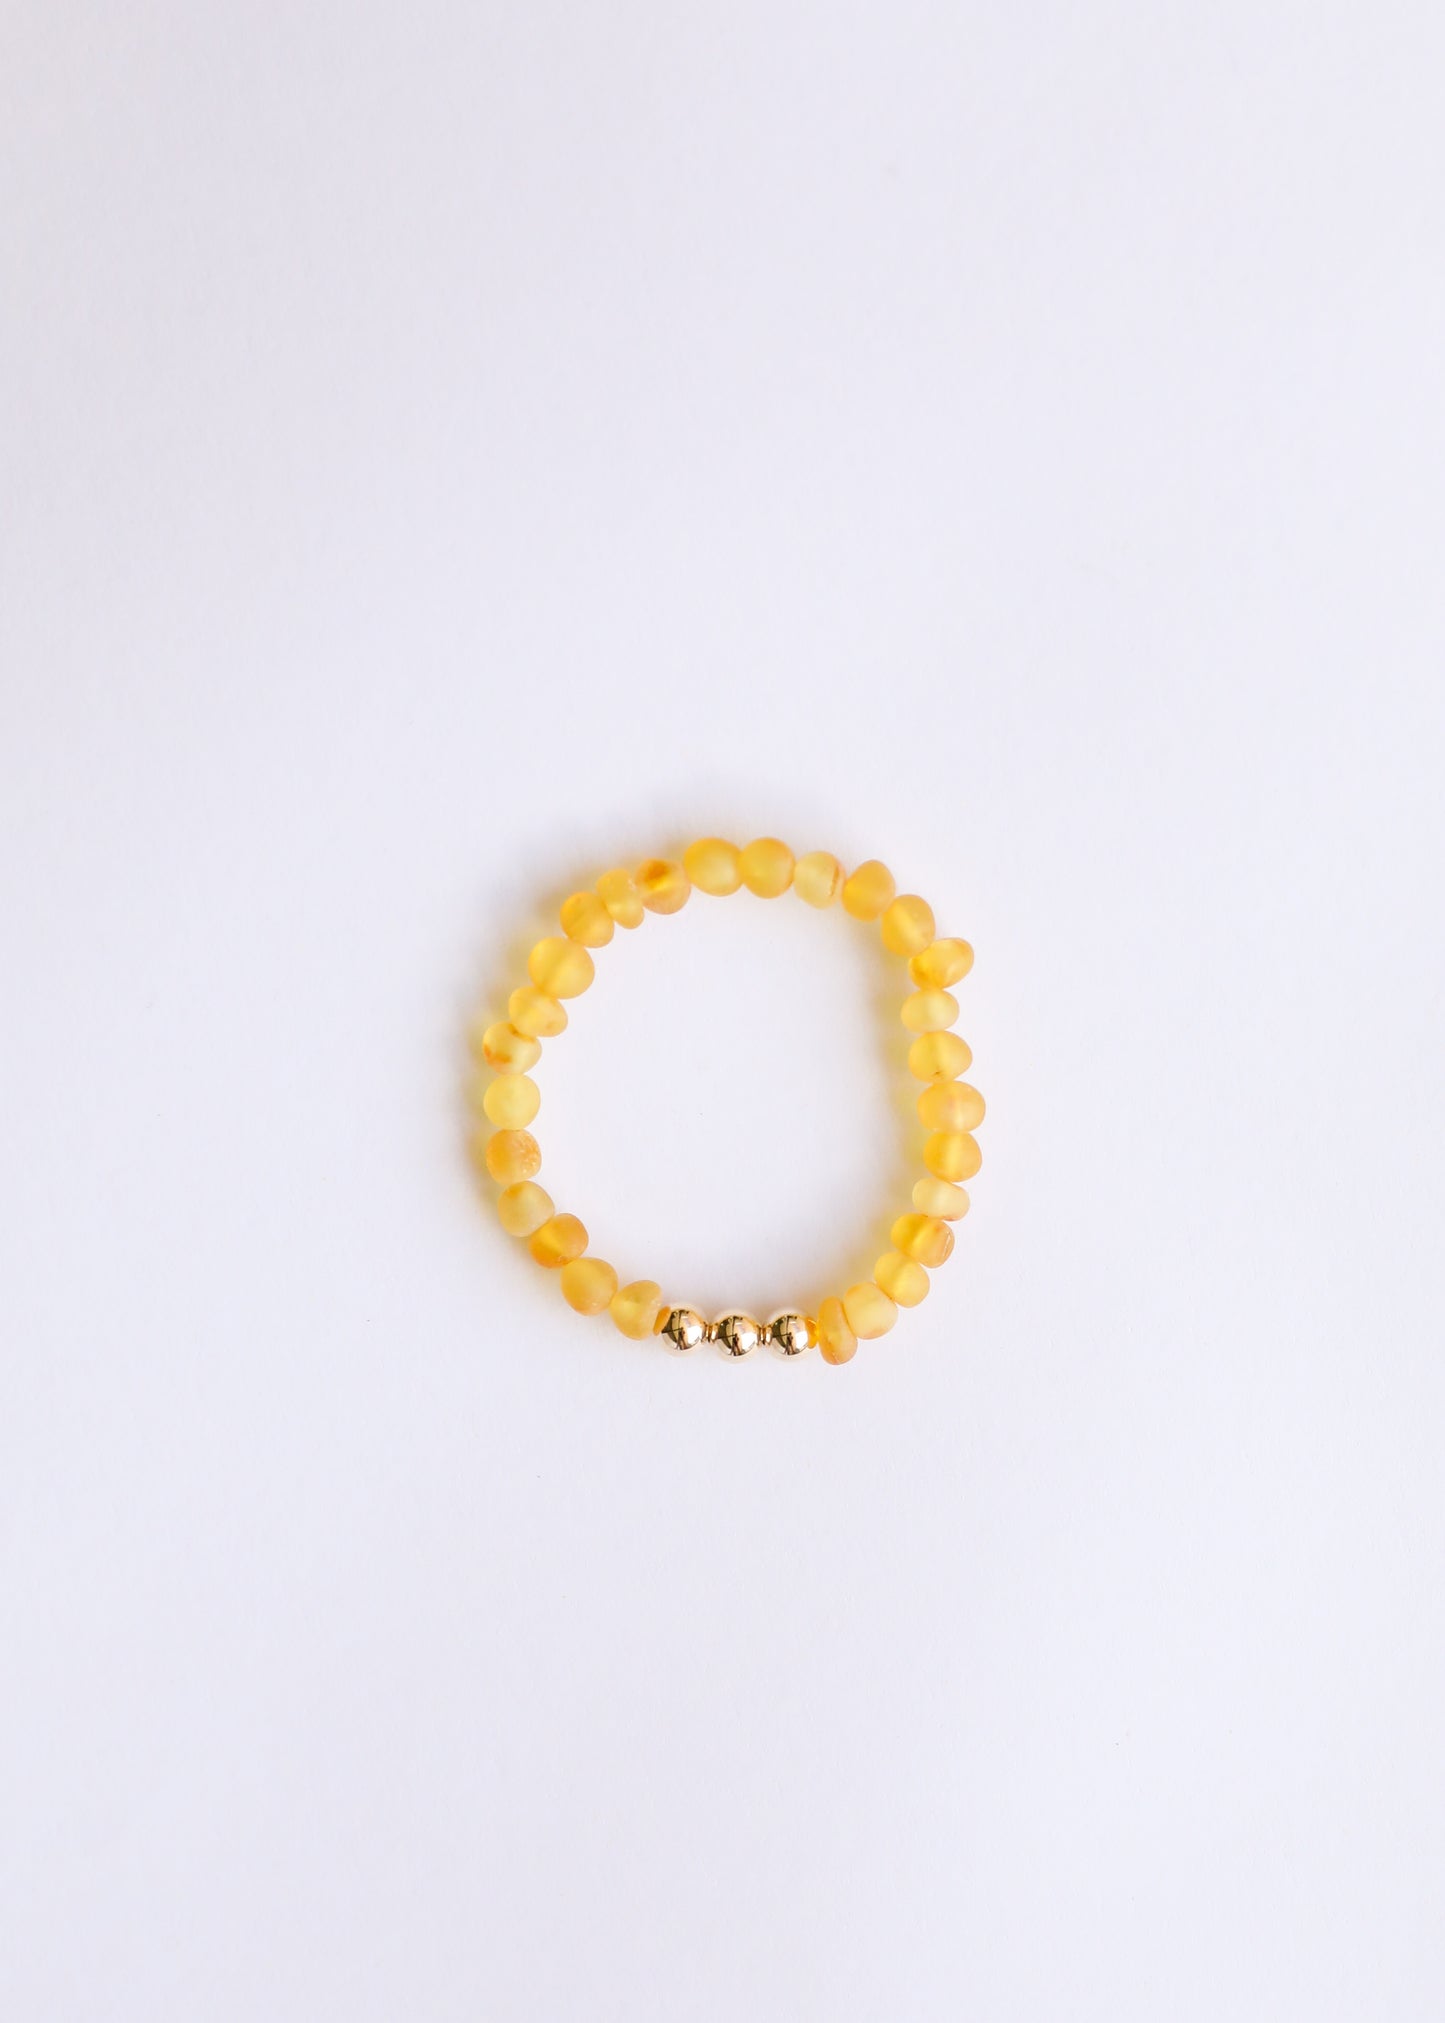 Raw Honey Baltic Amber + Gold || Adult Bracelet Stack ||